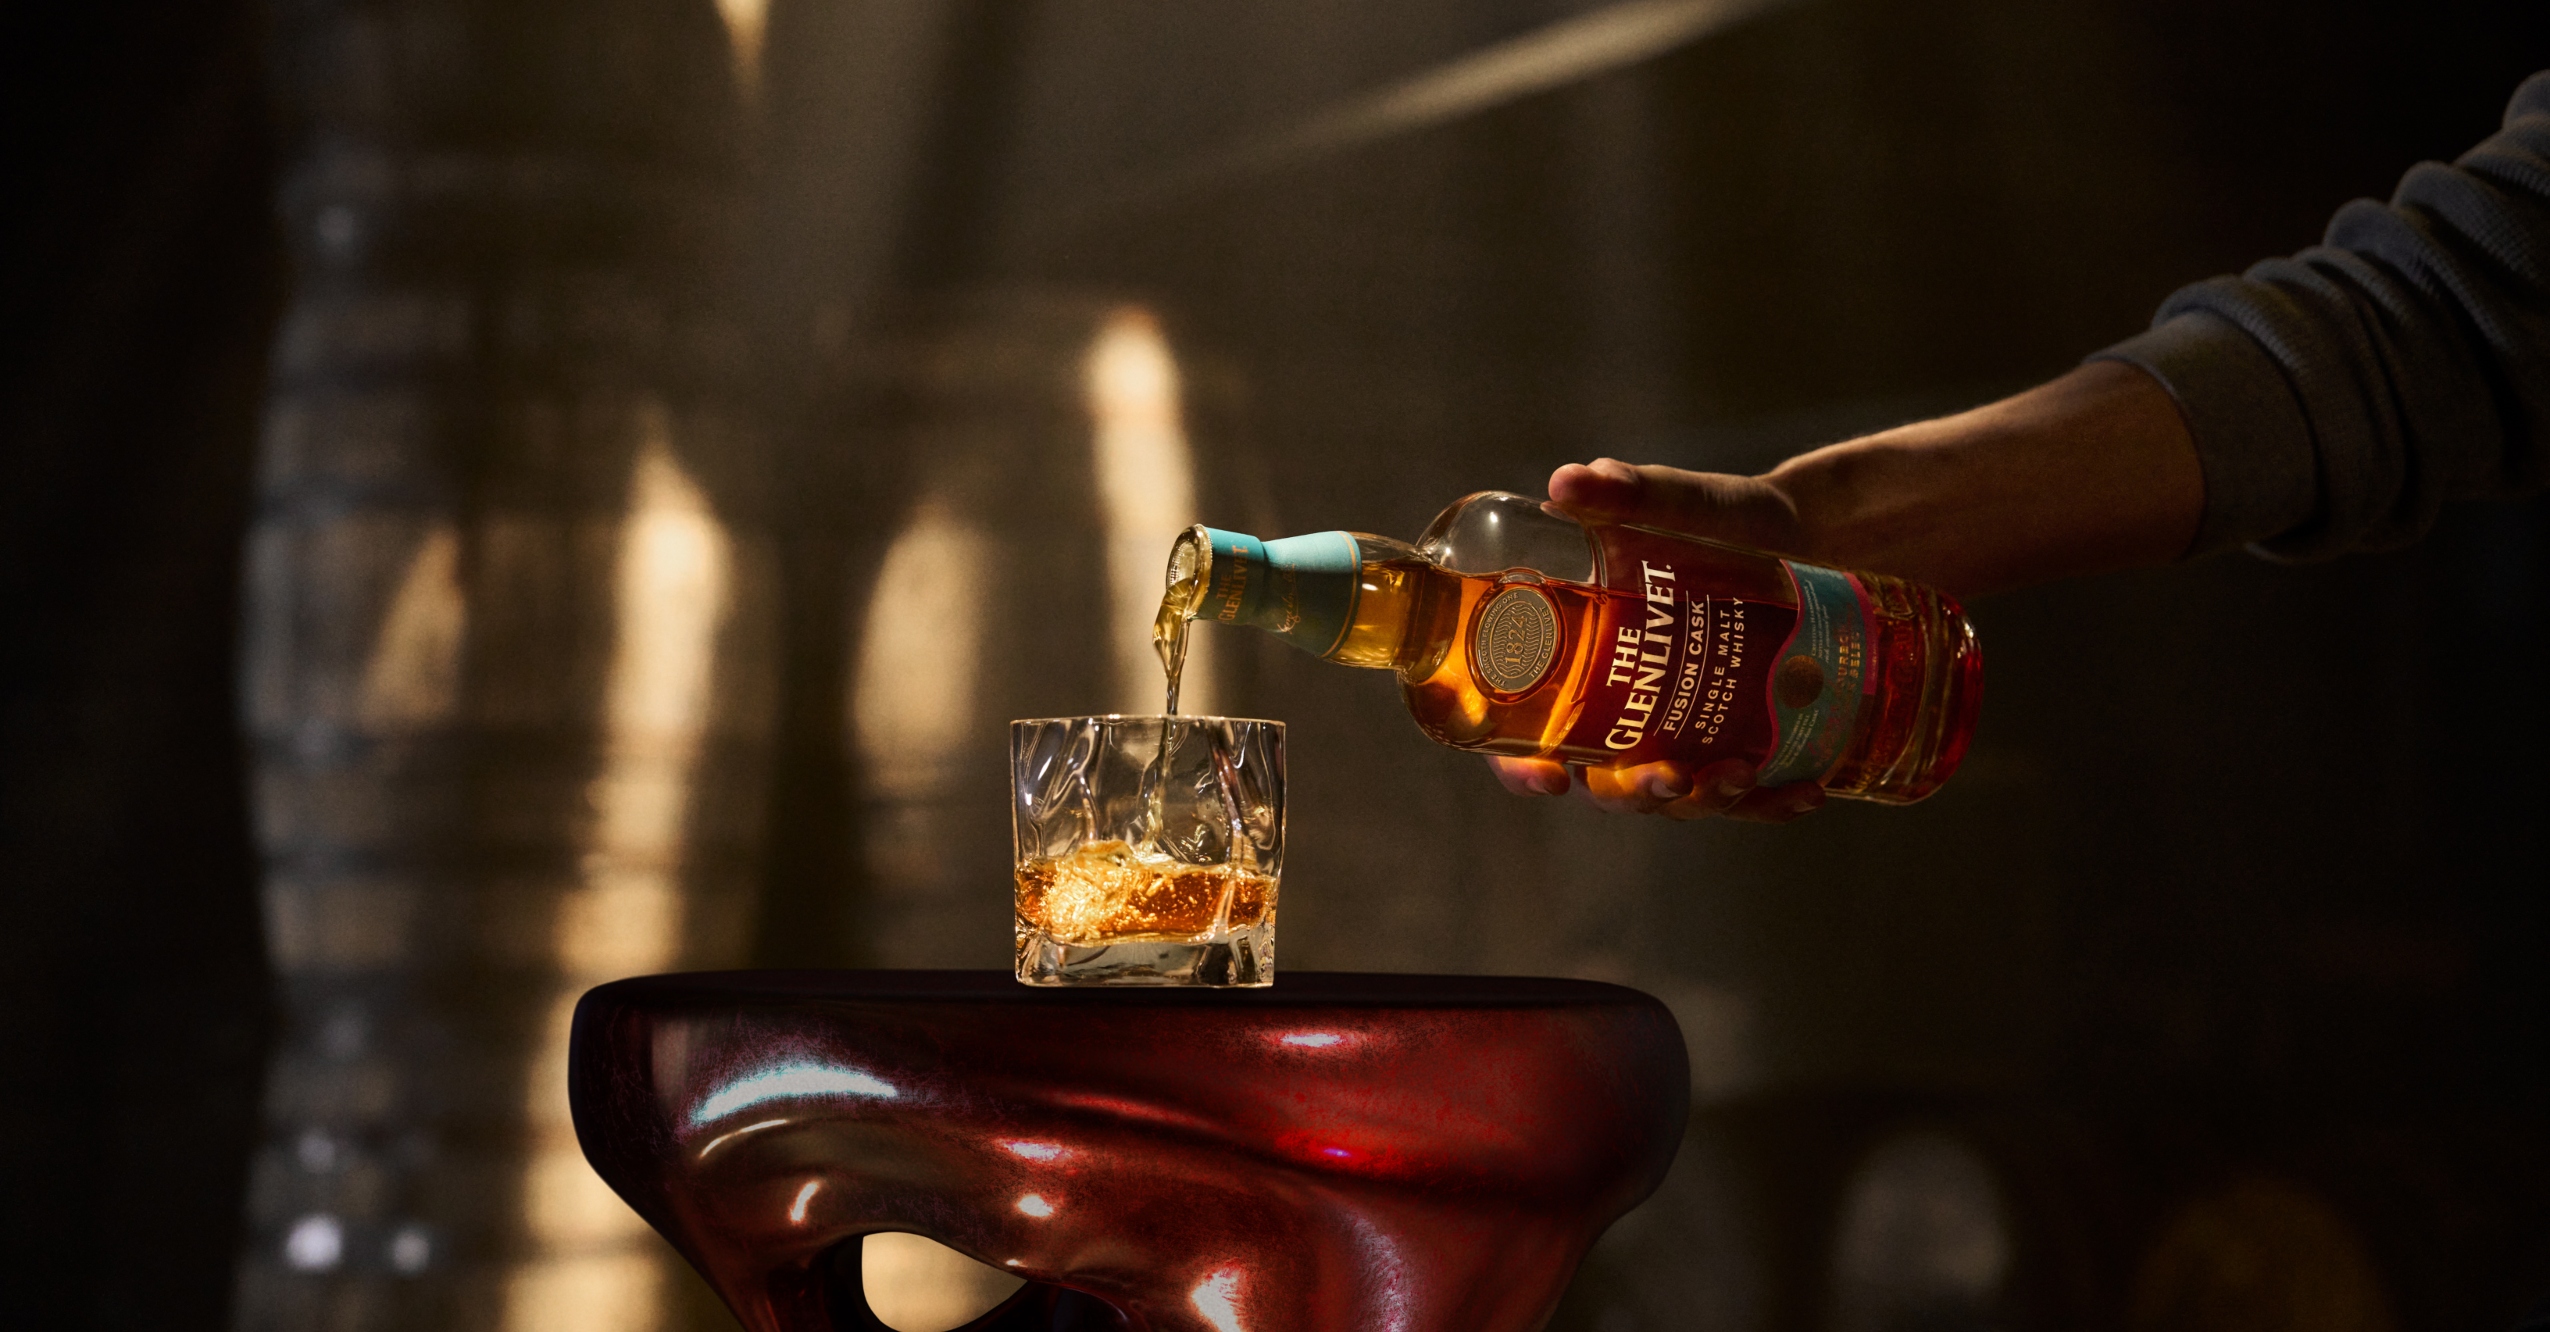 The Glenlivet Finished Its Latest Single Malt Scotch In Bourbon And Rum Casks